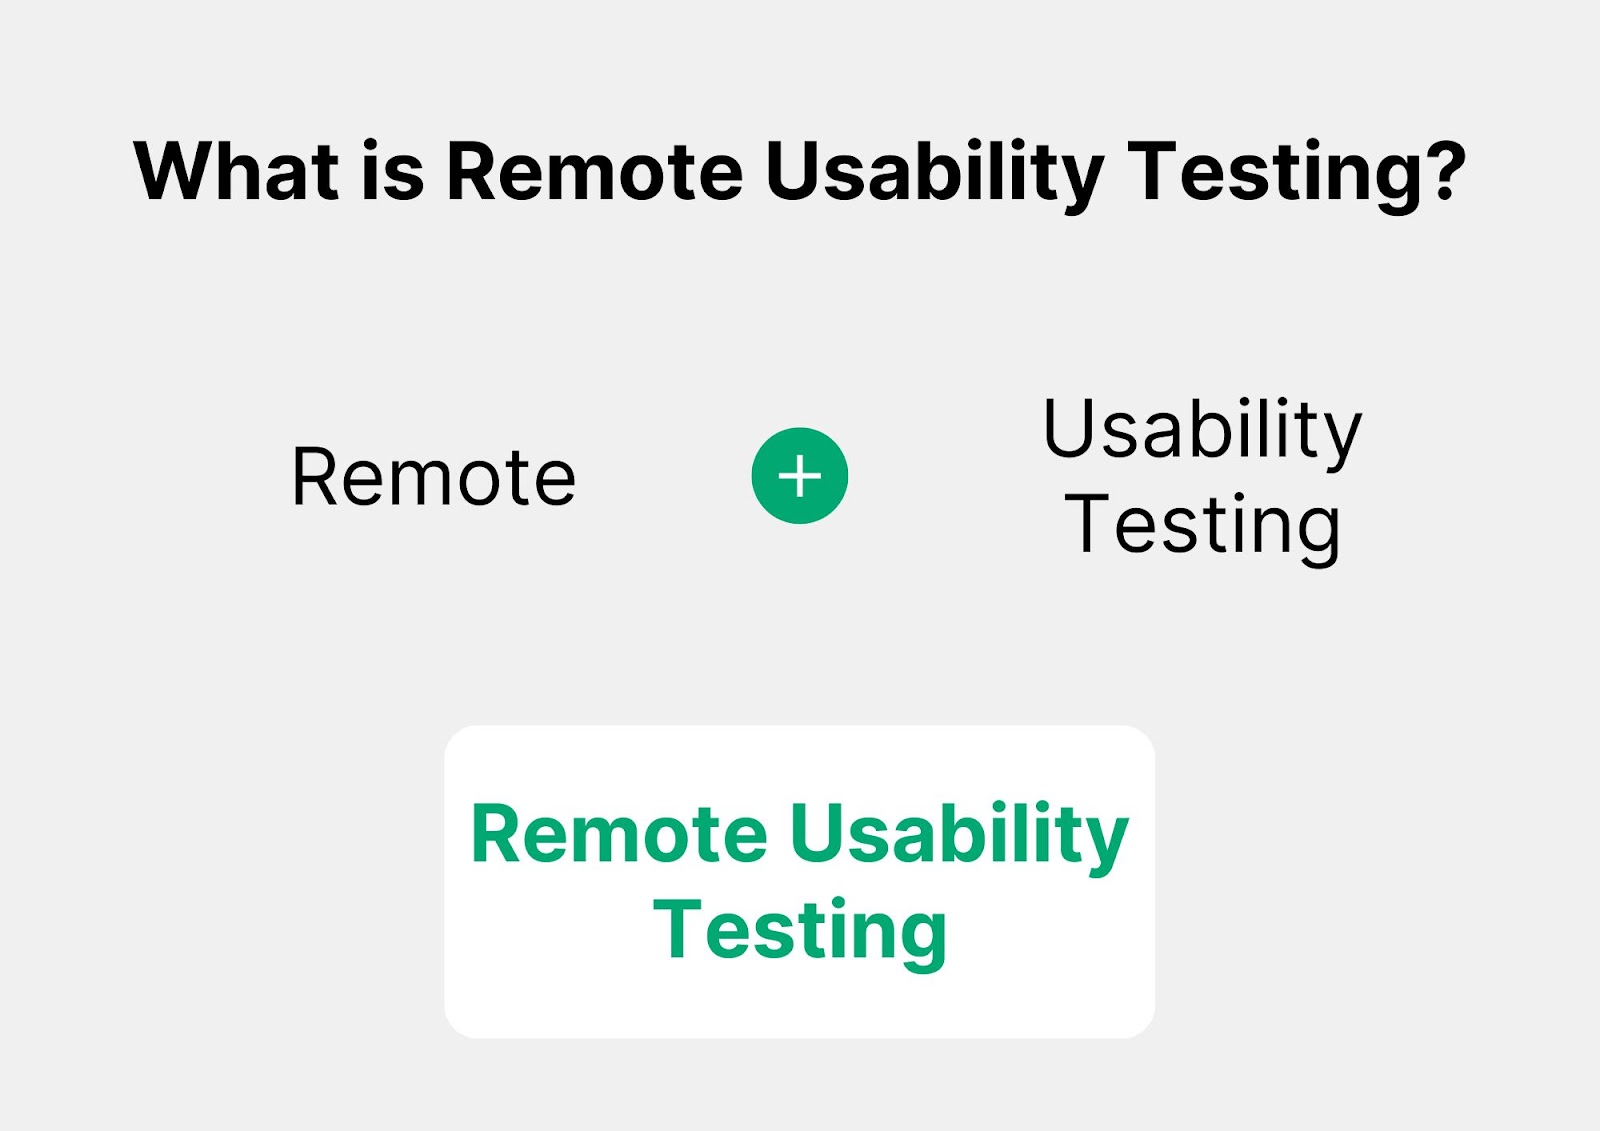 Remote usability testing